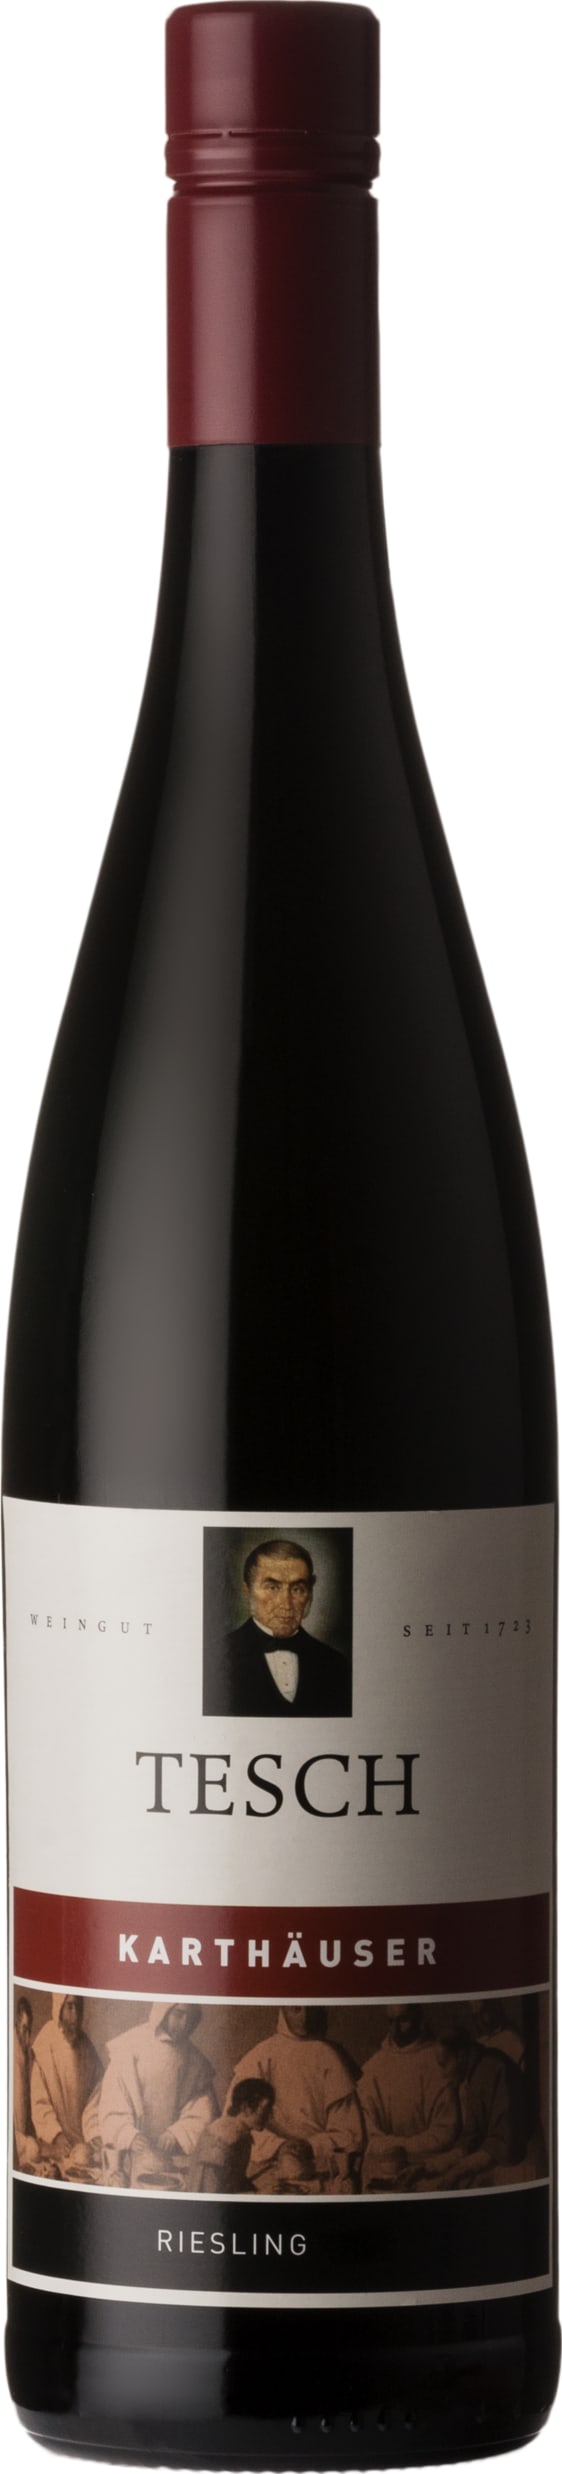 Weingut Tesch Riesling Karthauser 2020 75cl - Buy Weingut Tesch Wines from GREAT WINES DIRECT wine shop